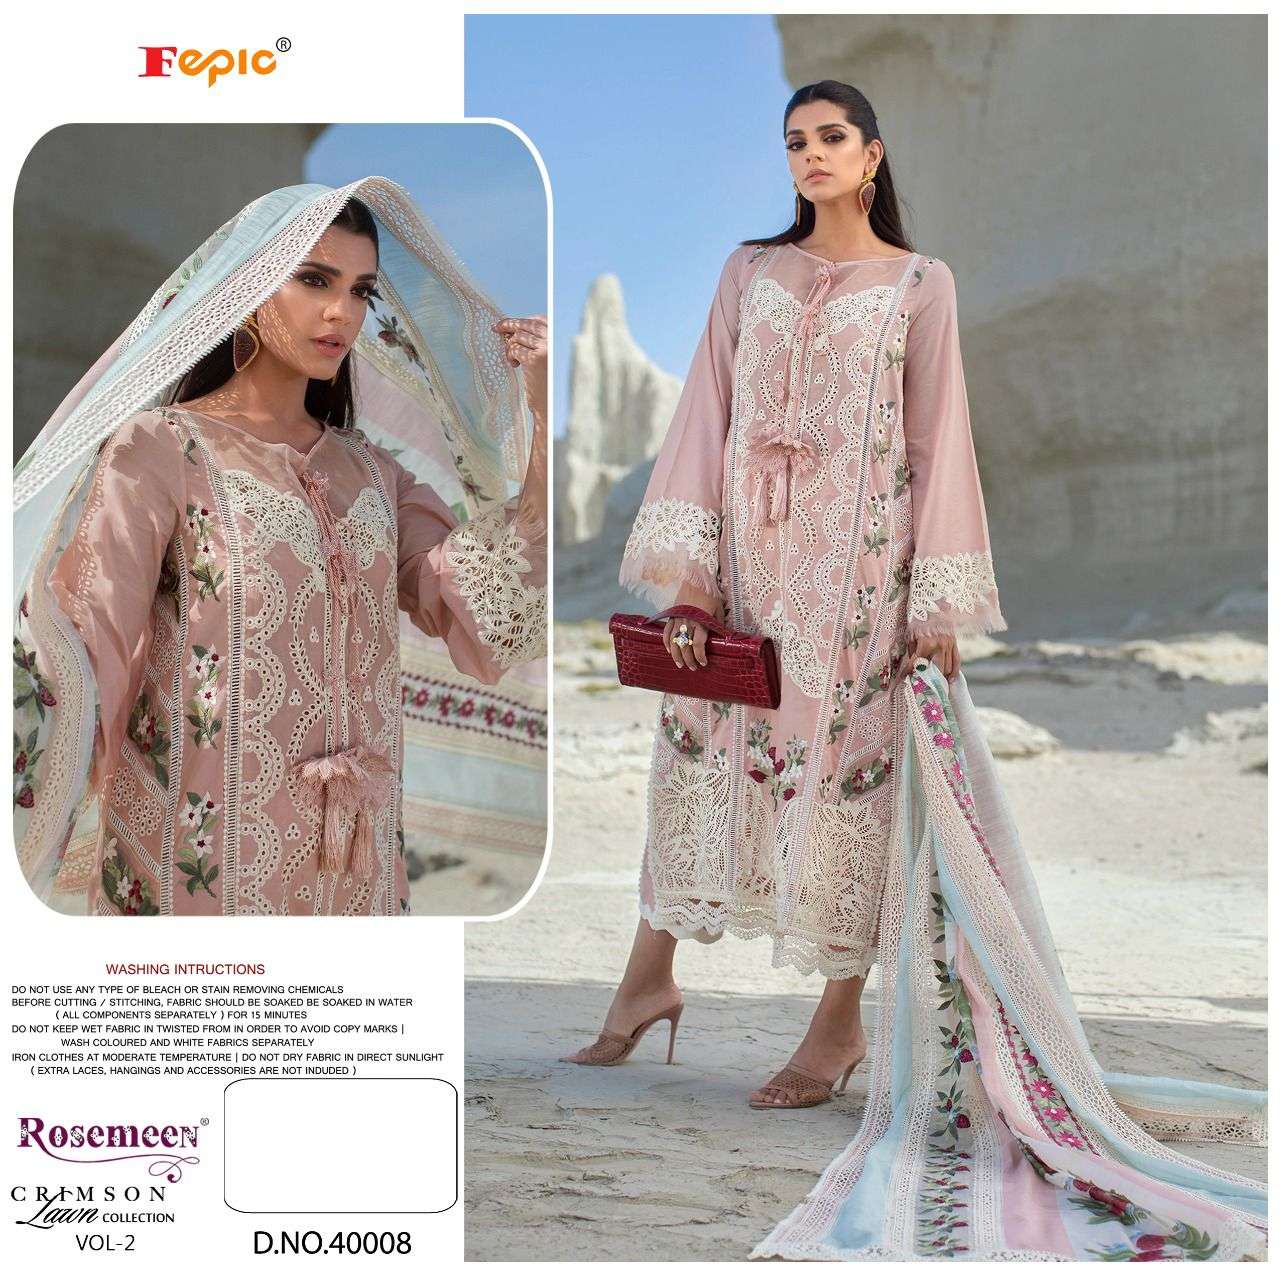 Rosemeen Crimson Lawn collection Vol 2 By Fepic Designer Wholesale Online Salwar Suit Set